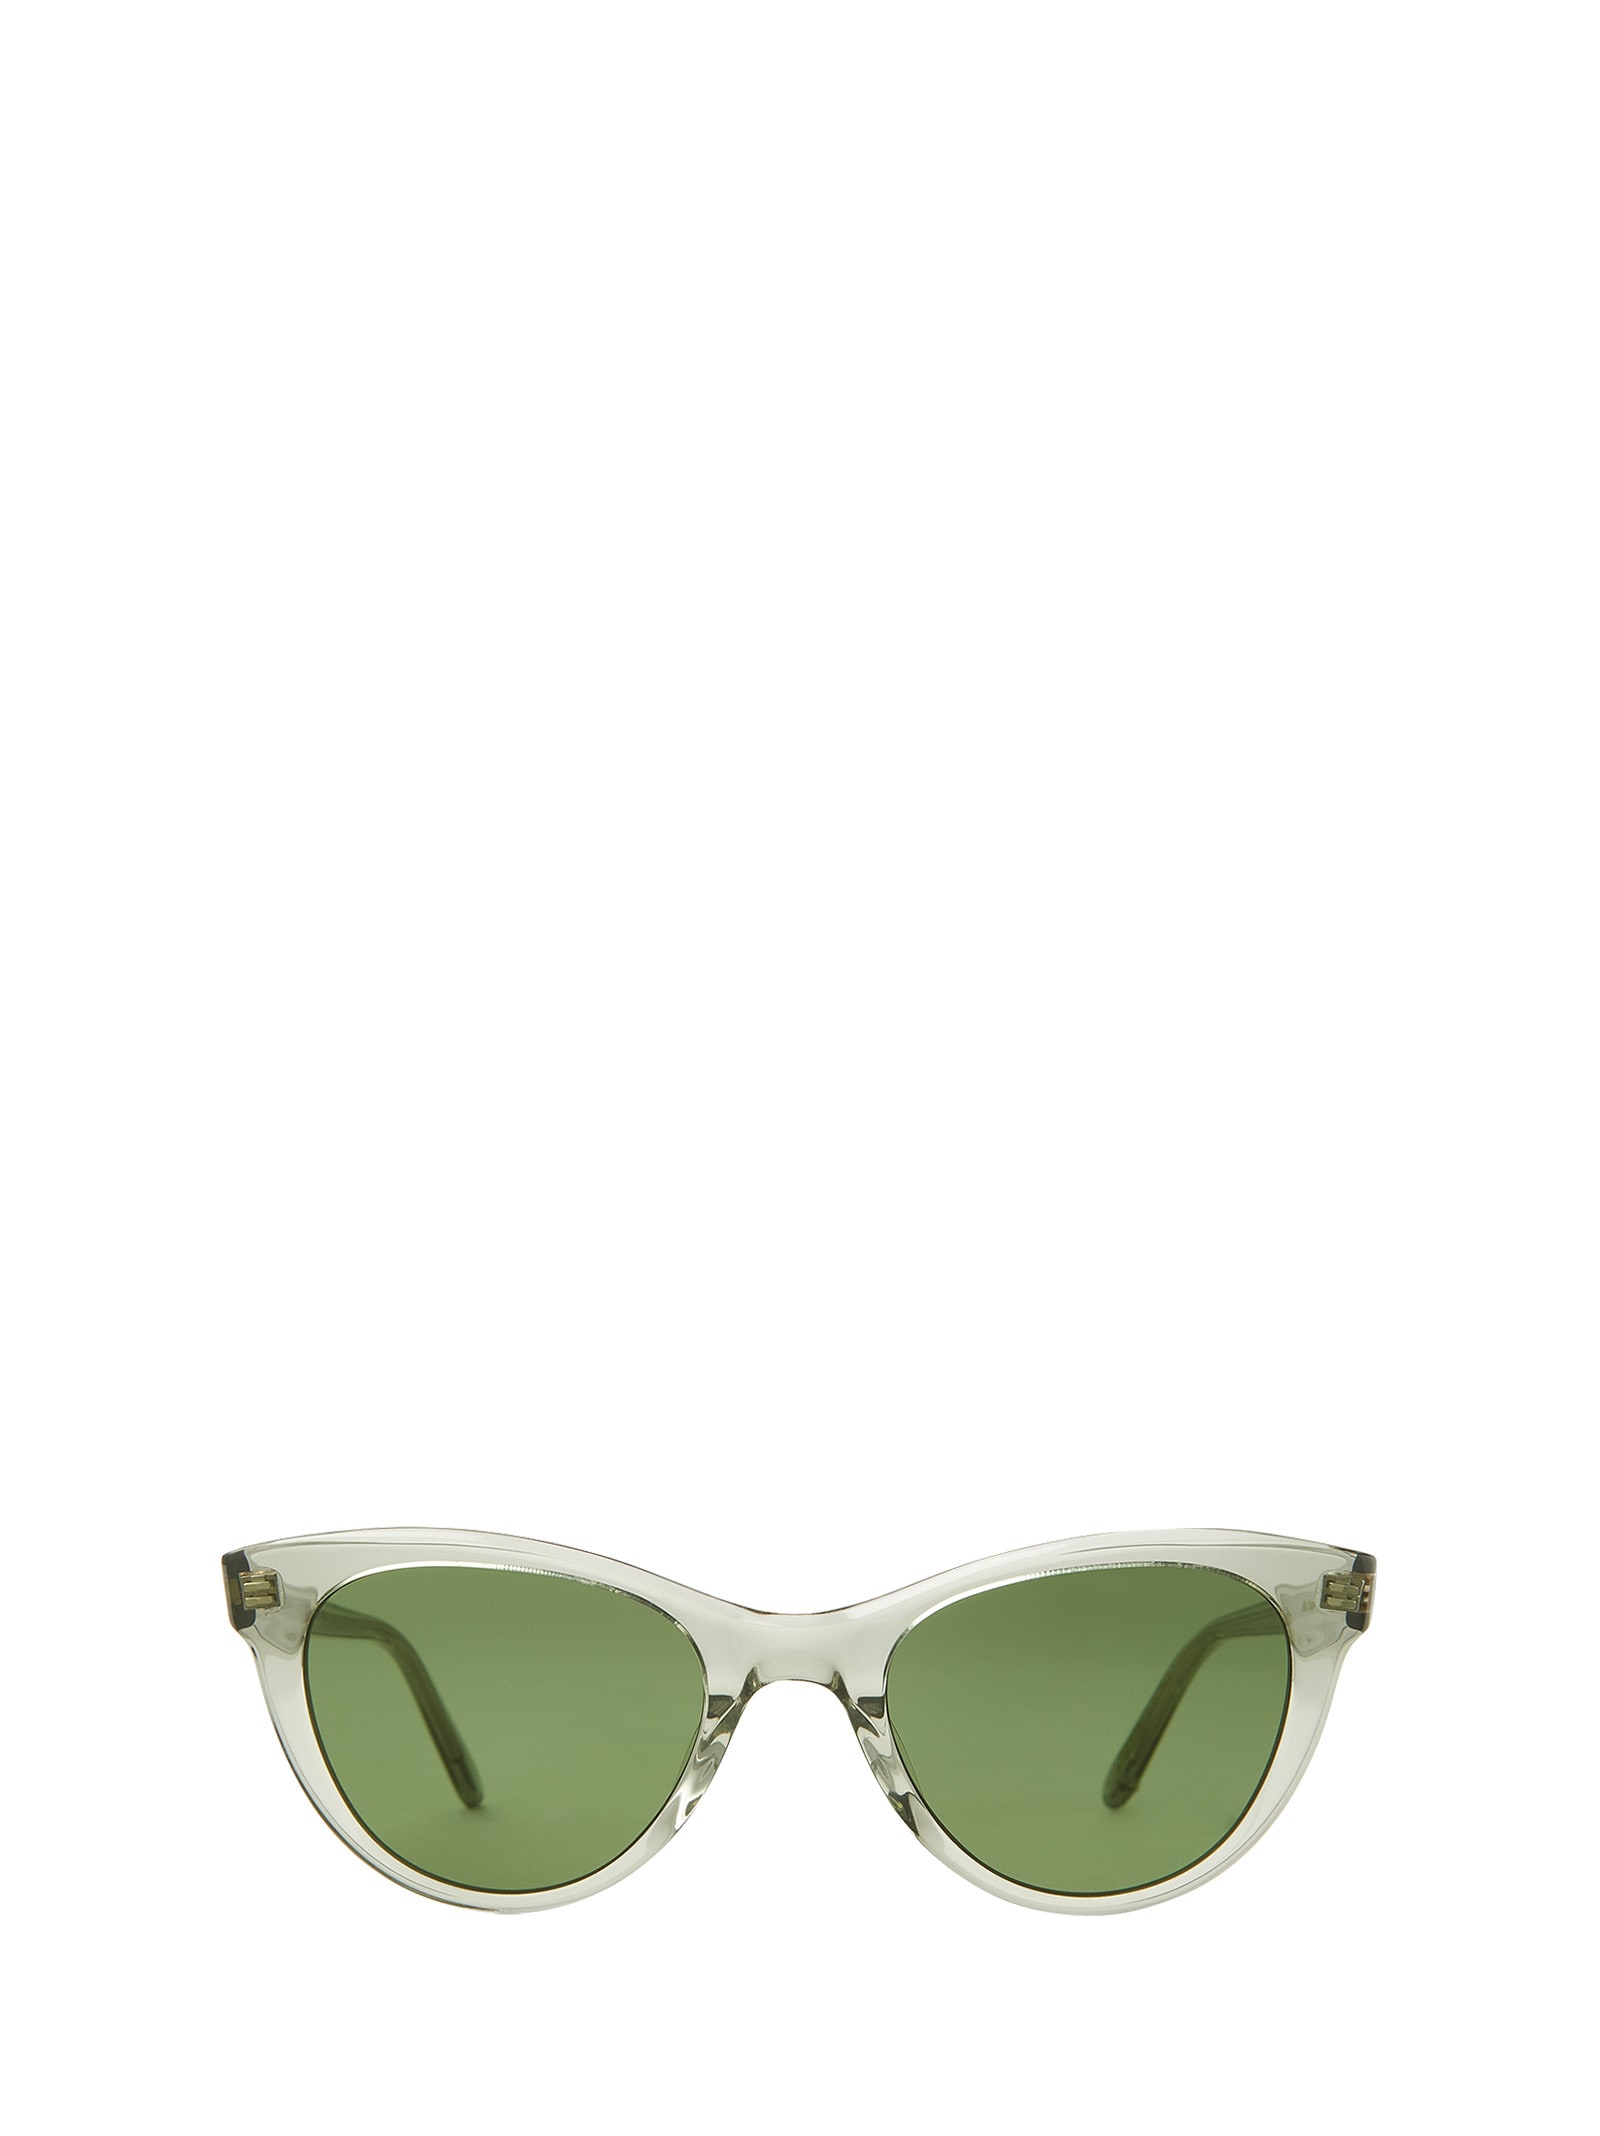 Glco X Clare V. Sun Bio Sage Sunglasses